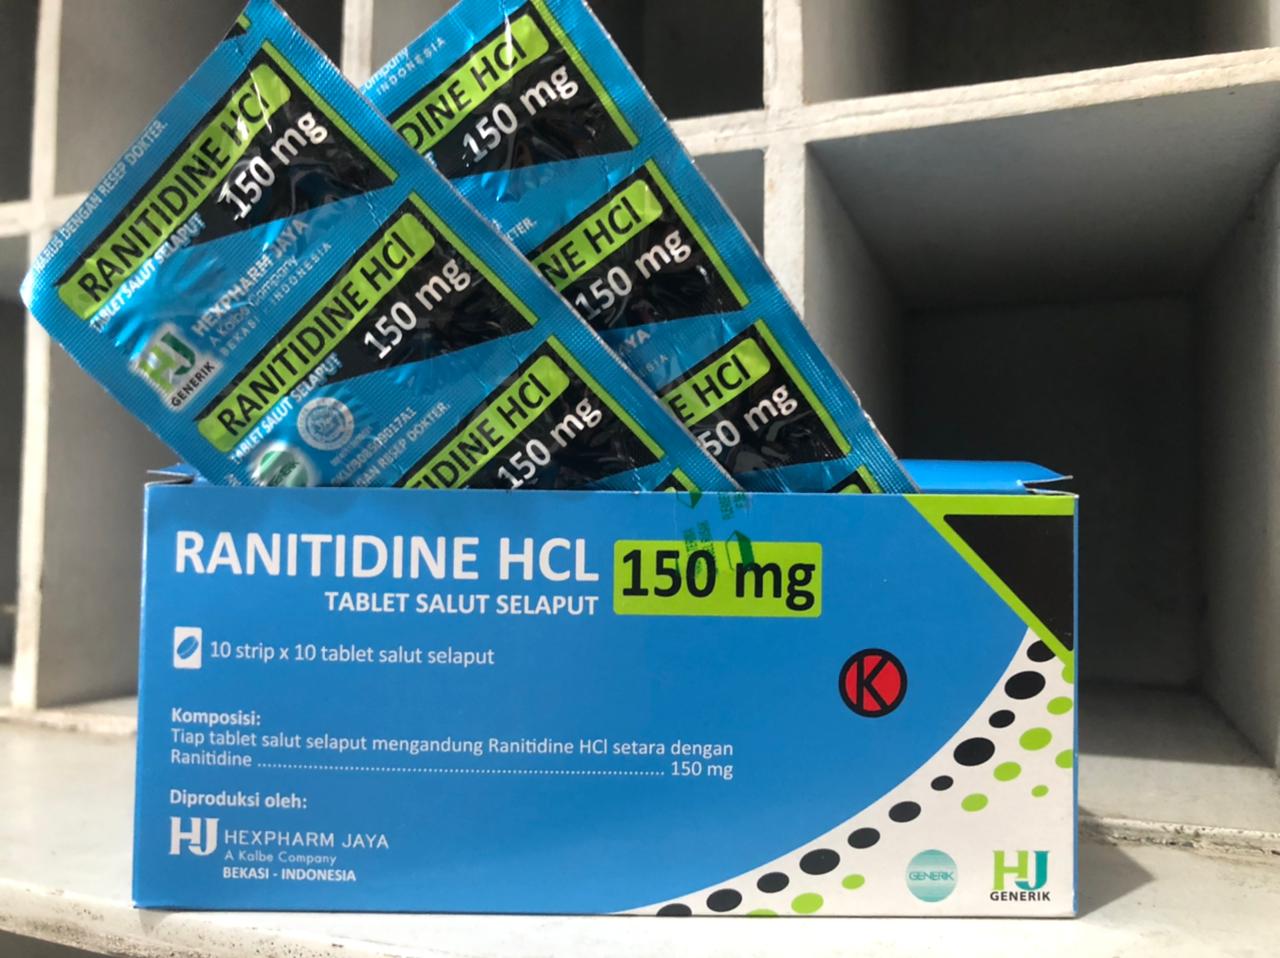 RANITIDIN HCL 150 mg